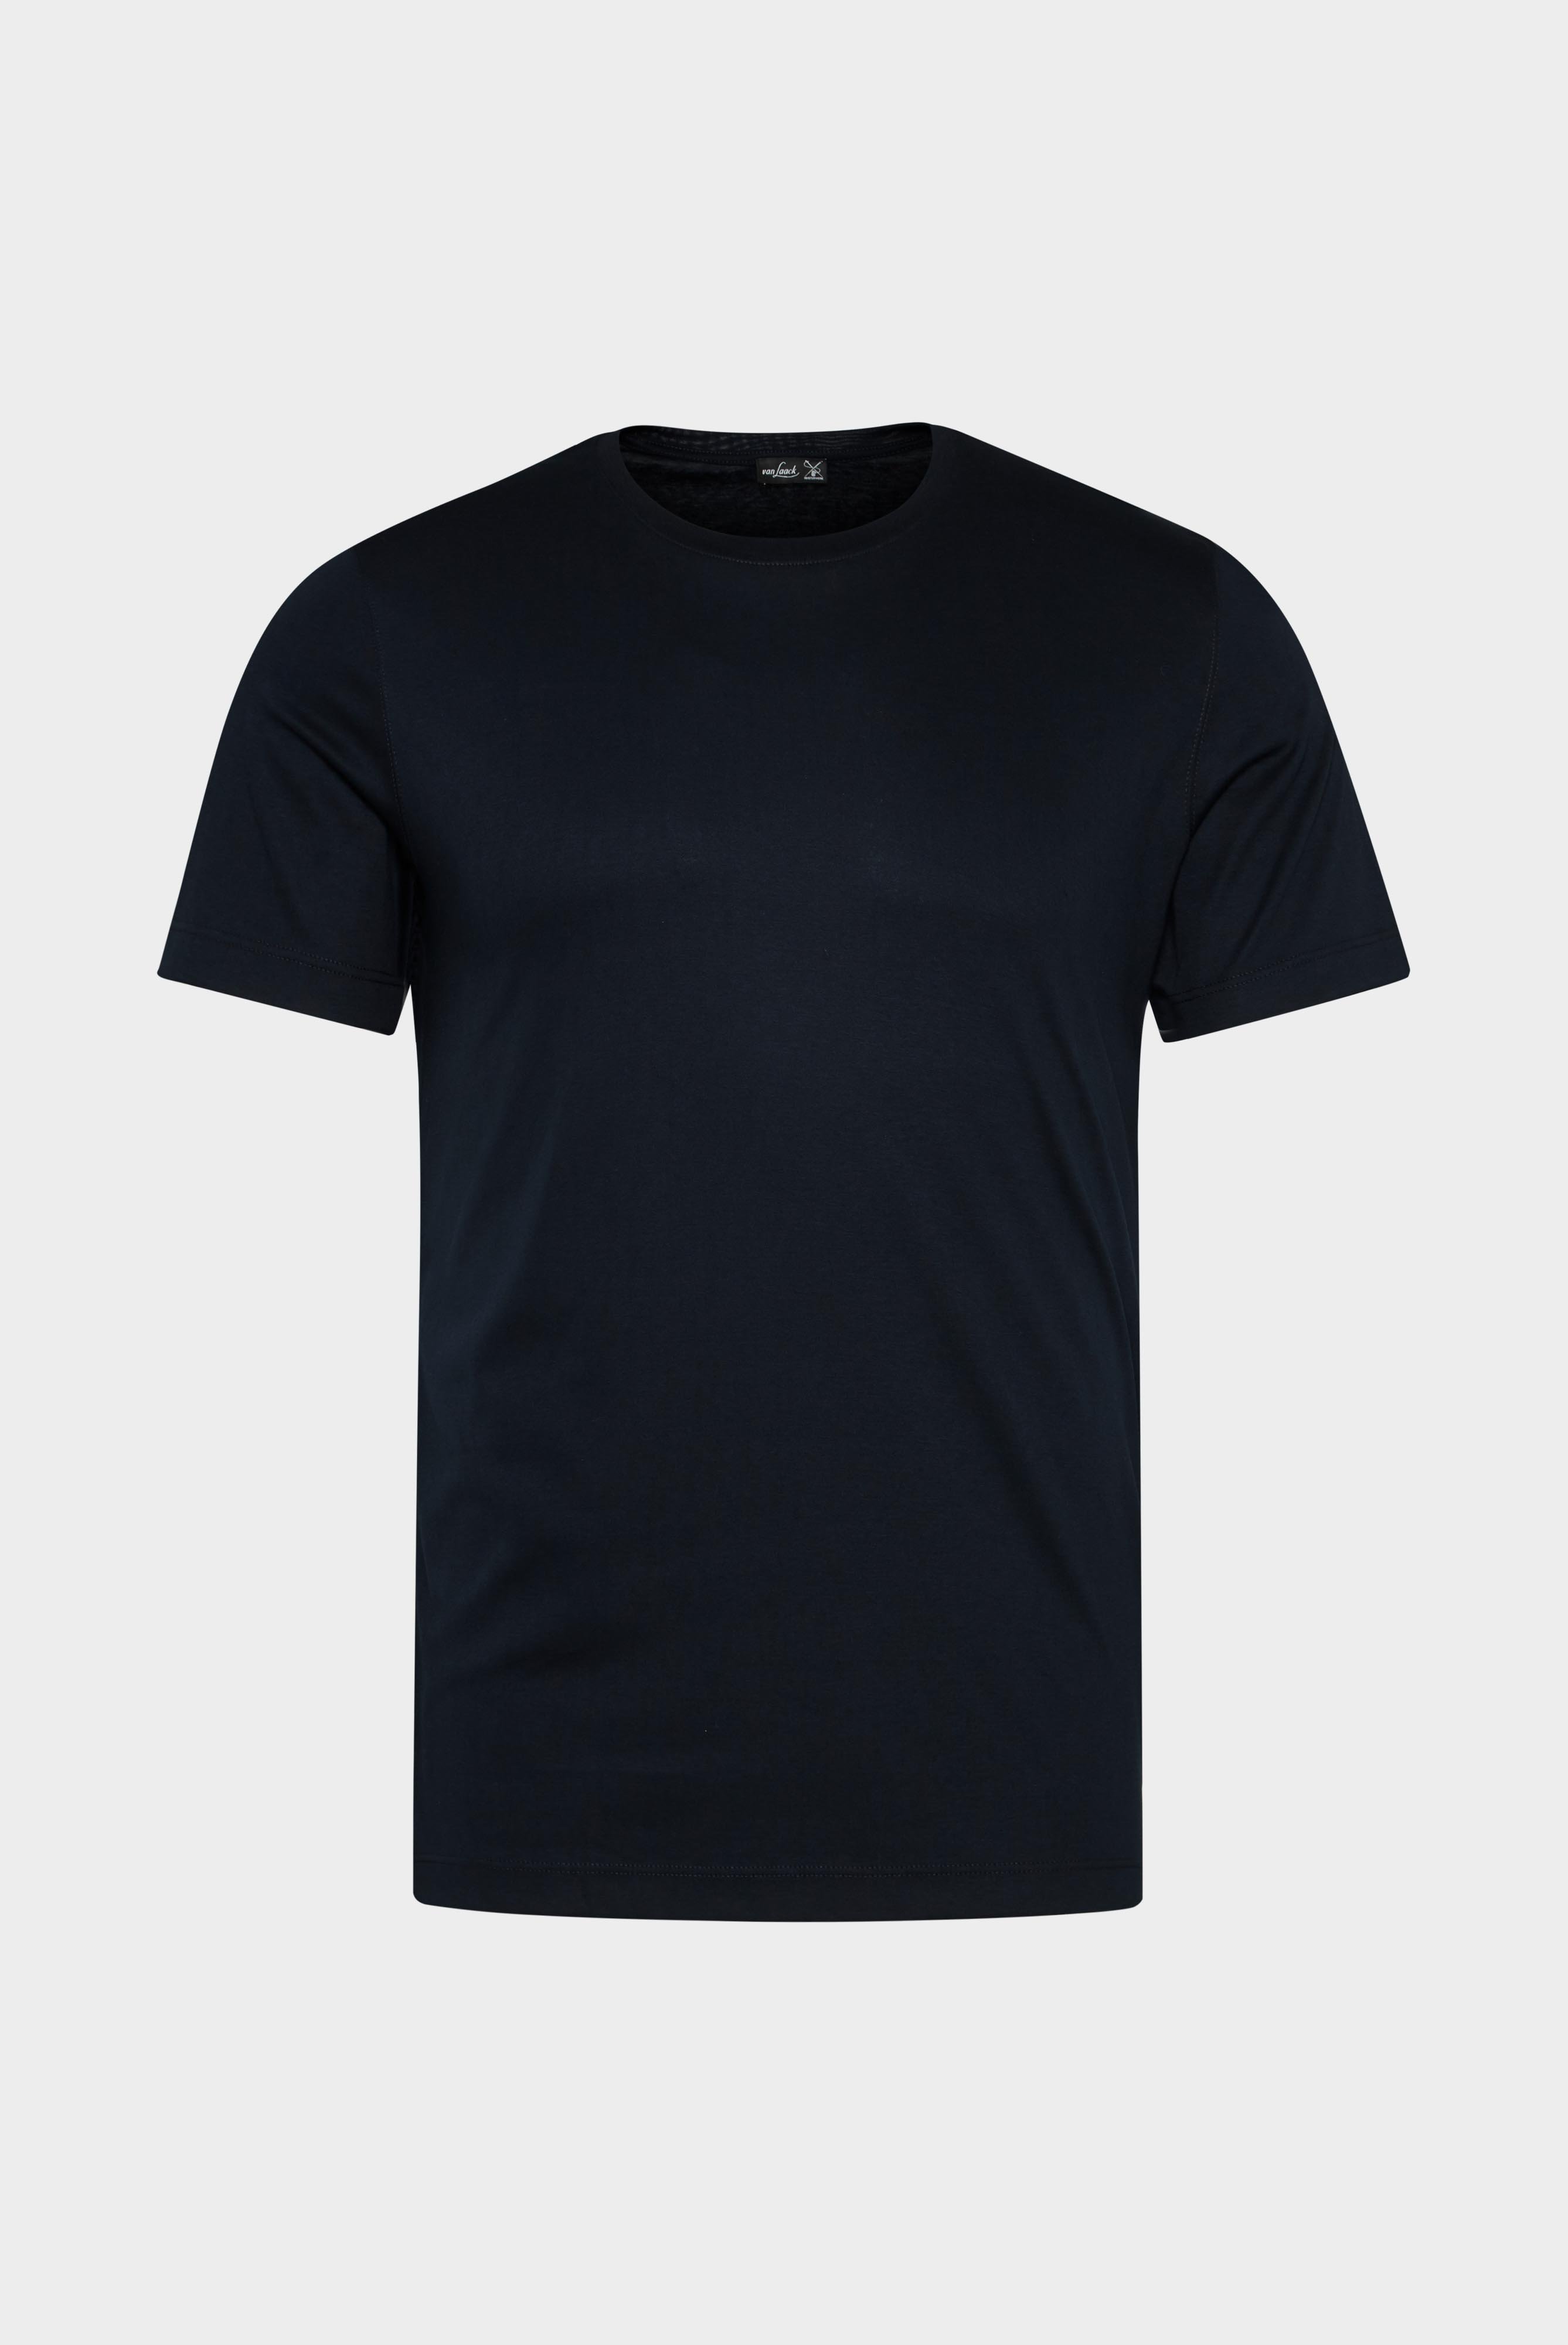 T-Shirts+Rundhals Jersey T-Shirt Slim Fit+20.1717.UX.180031.790.M